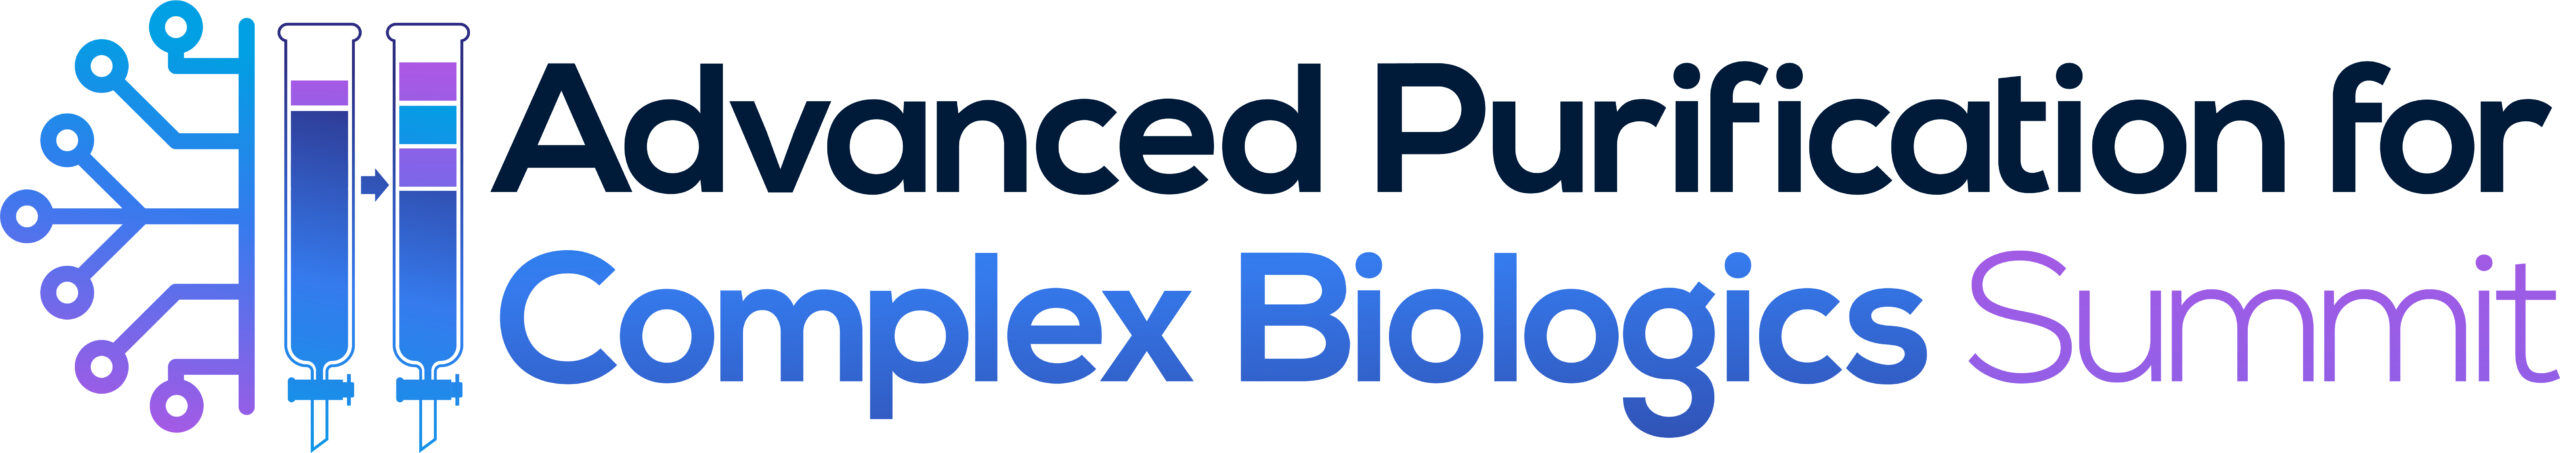 32314 Advanced Purification for Complex Biologics logo